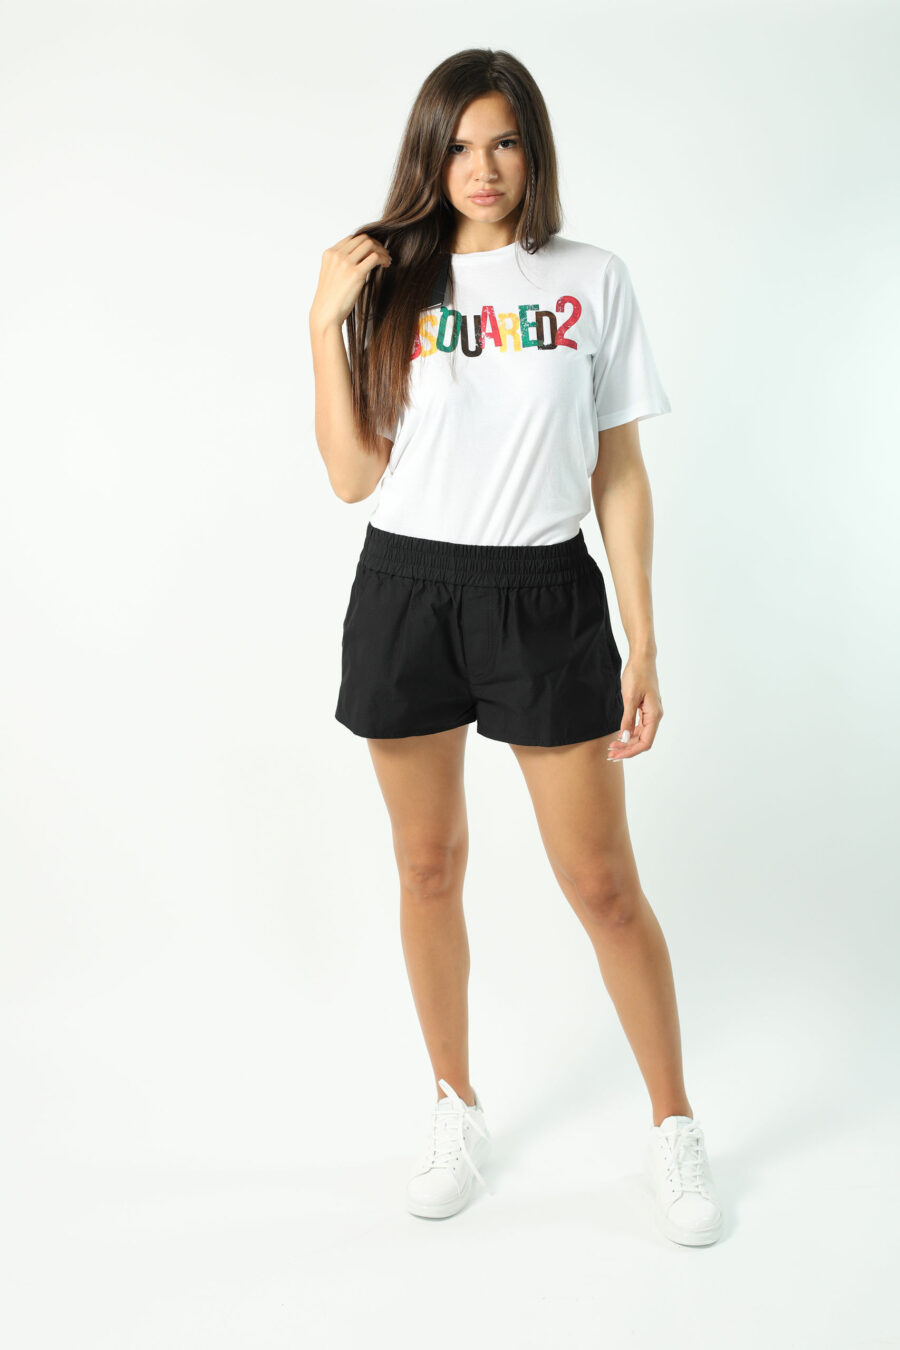 Schwarze Shorts mit mehrfarbigem Mini-Logo - Fotos 2932